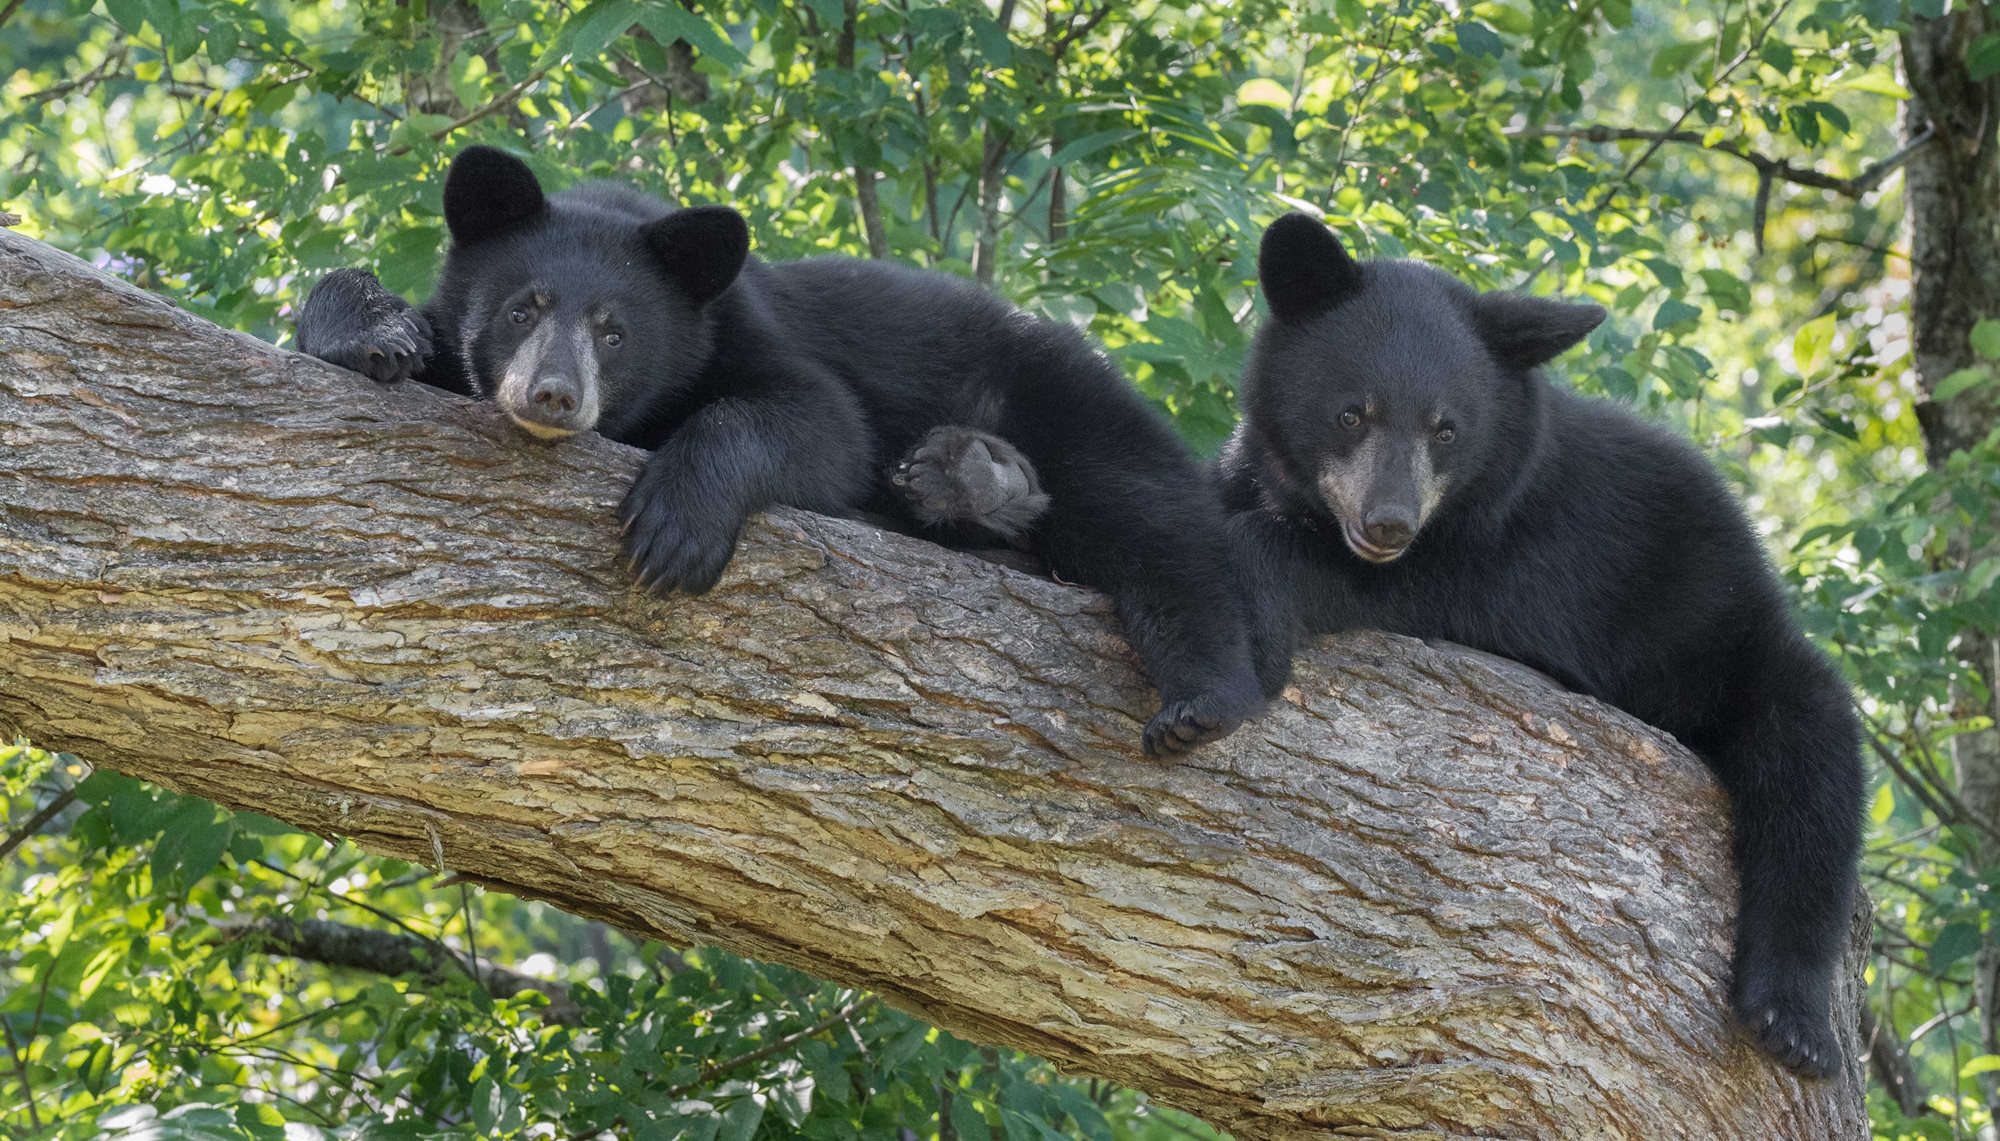 Two black bears in a tree.